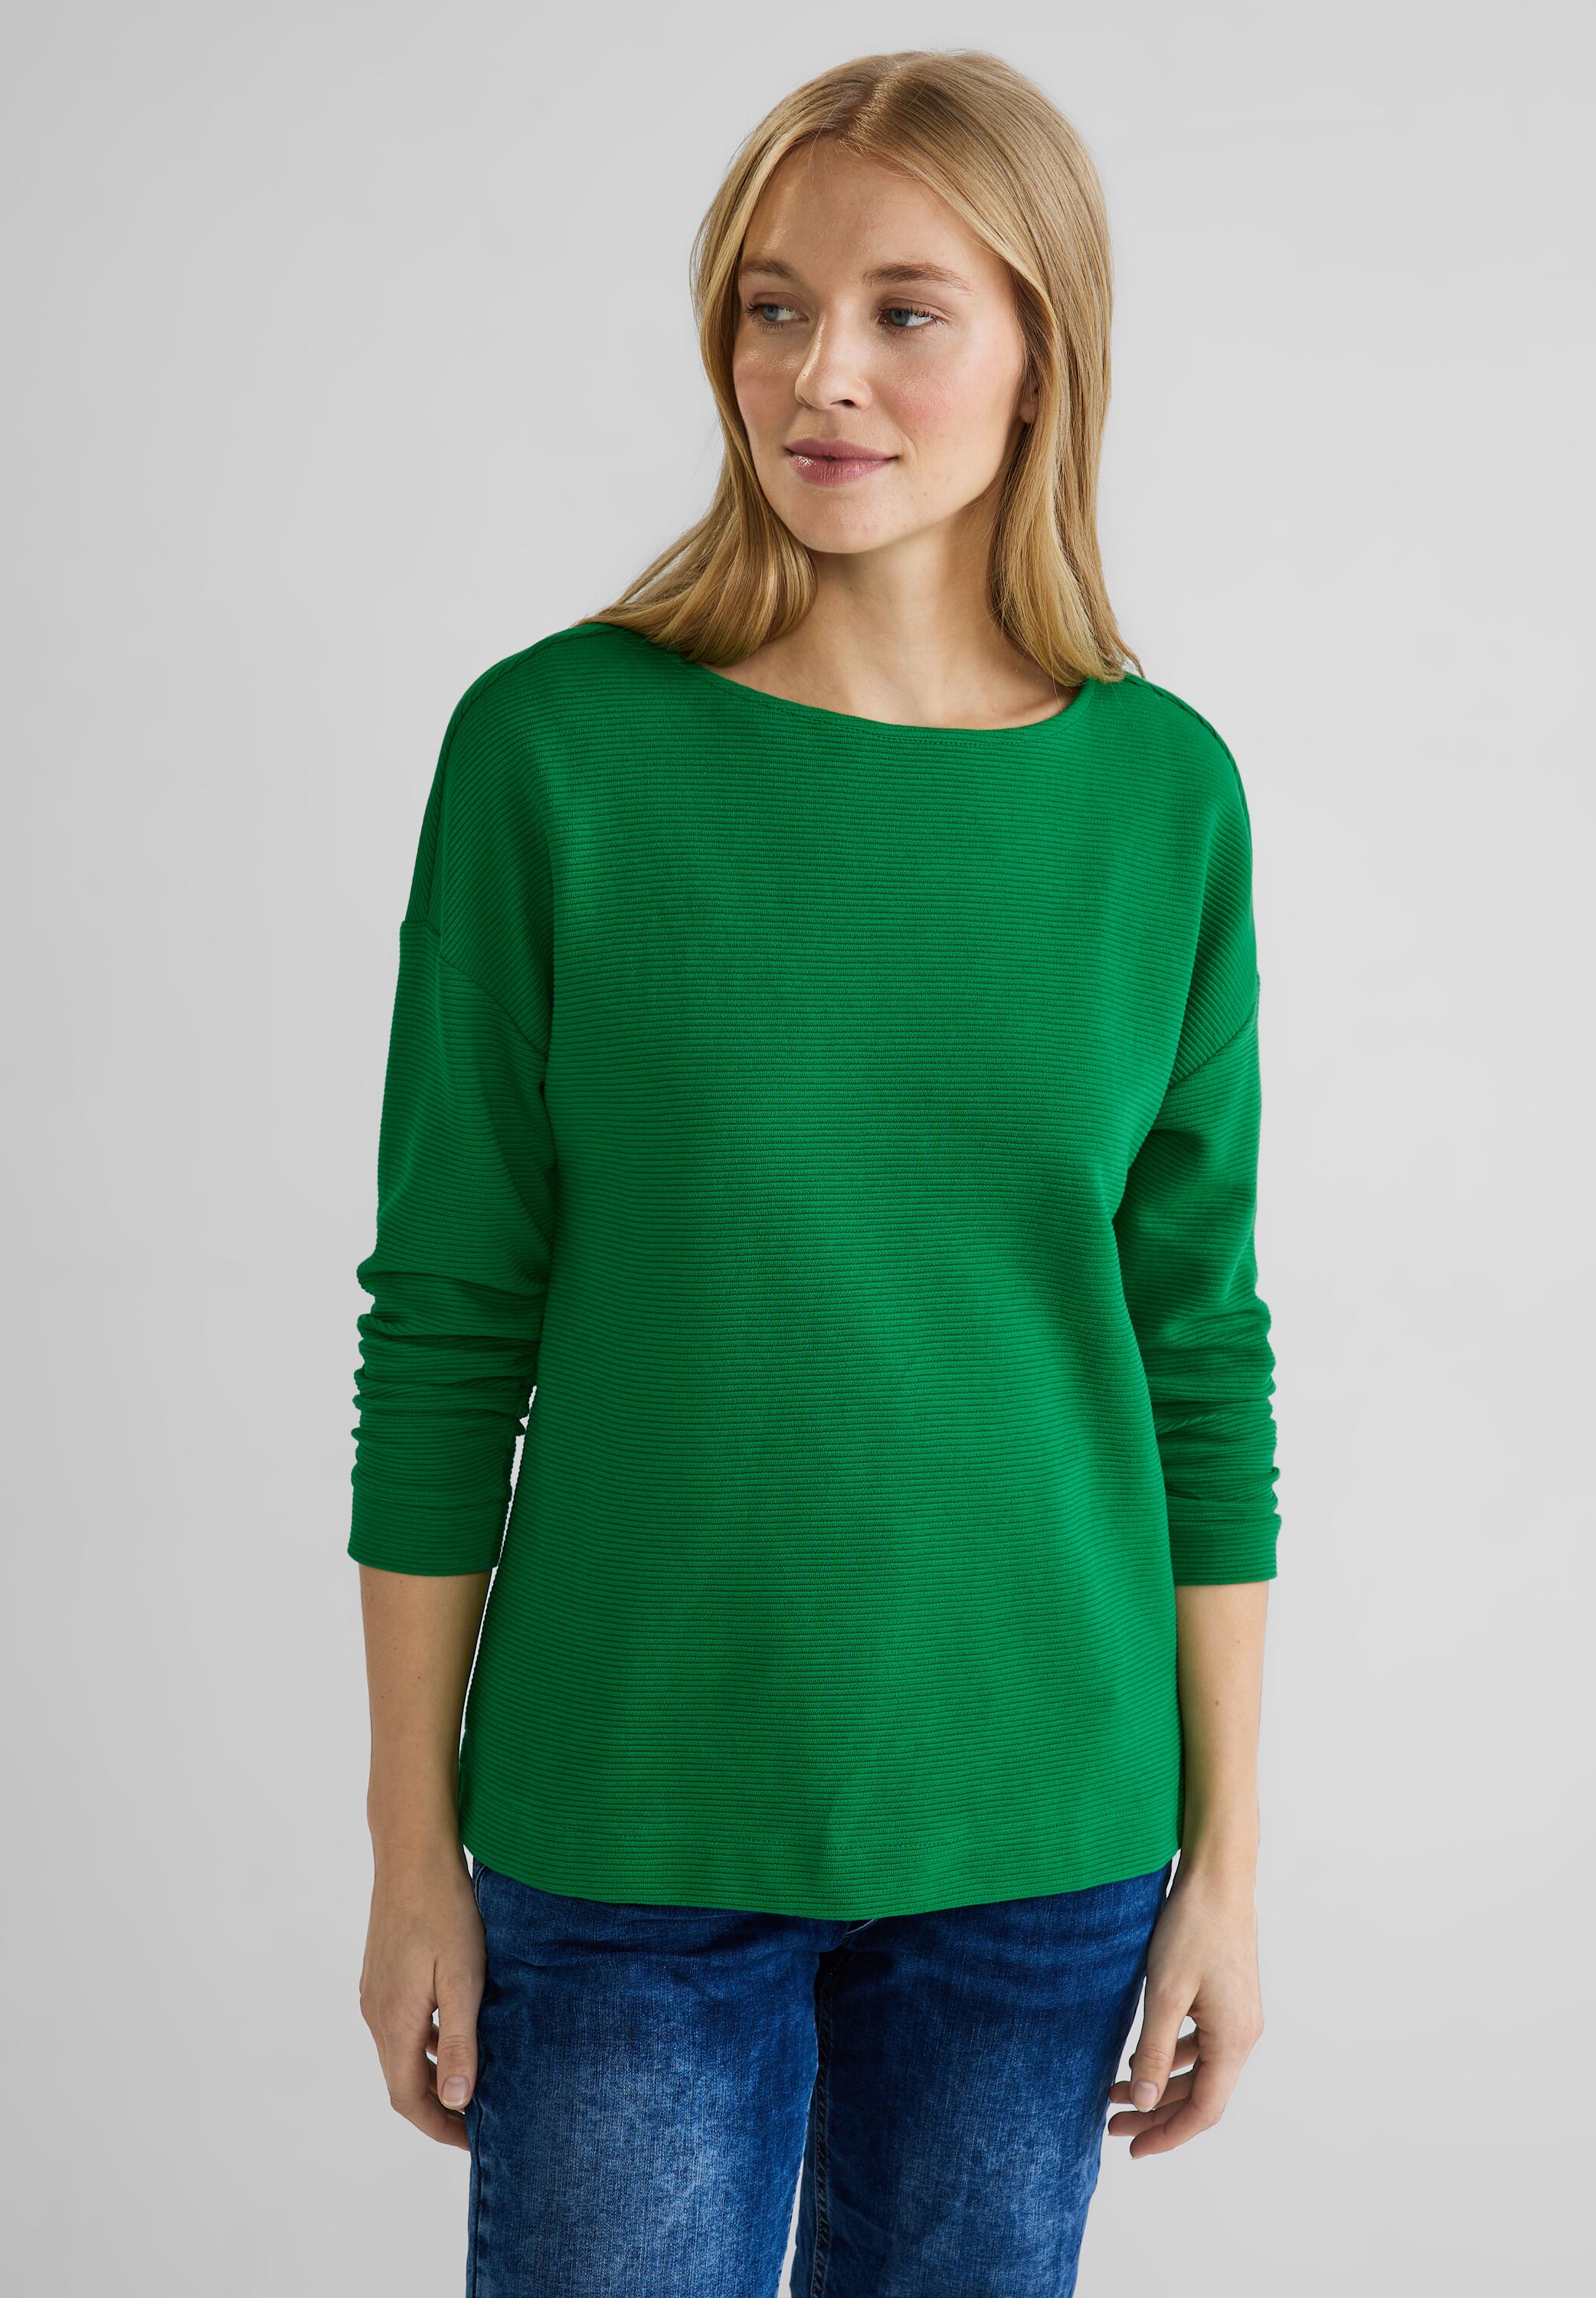 Street One Shirt in Brisk reduziert Mode im SALE A319131-14649 - CONCEPT Green